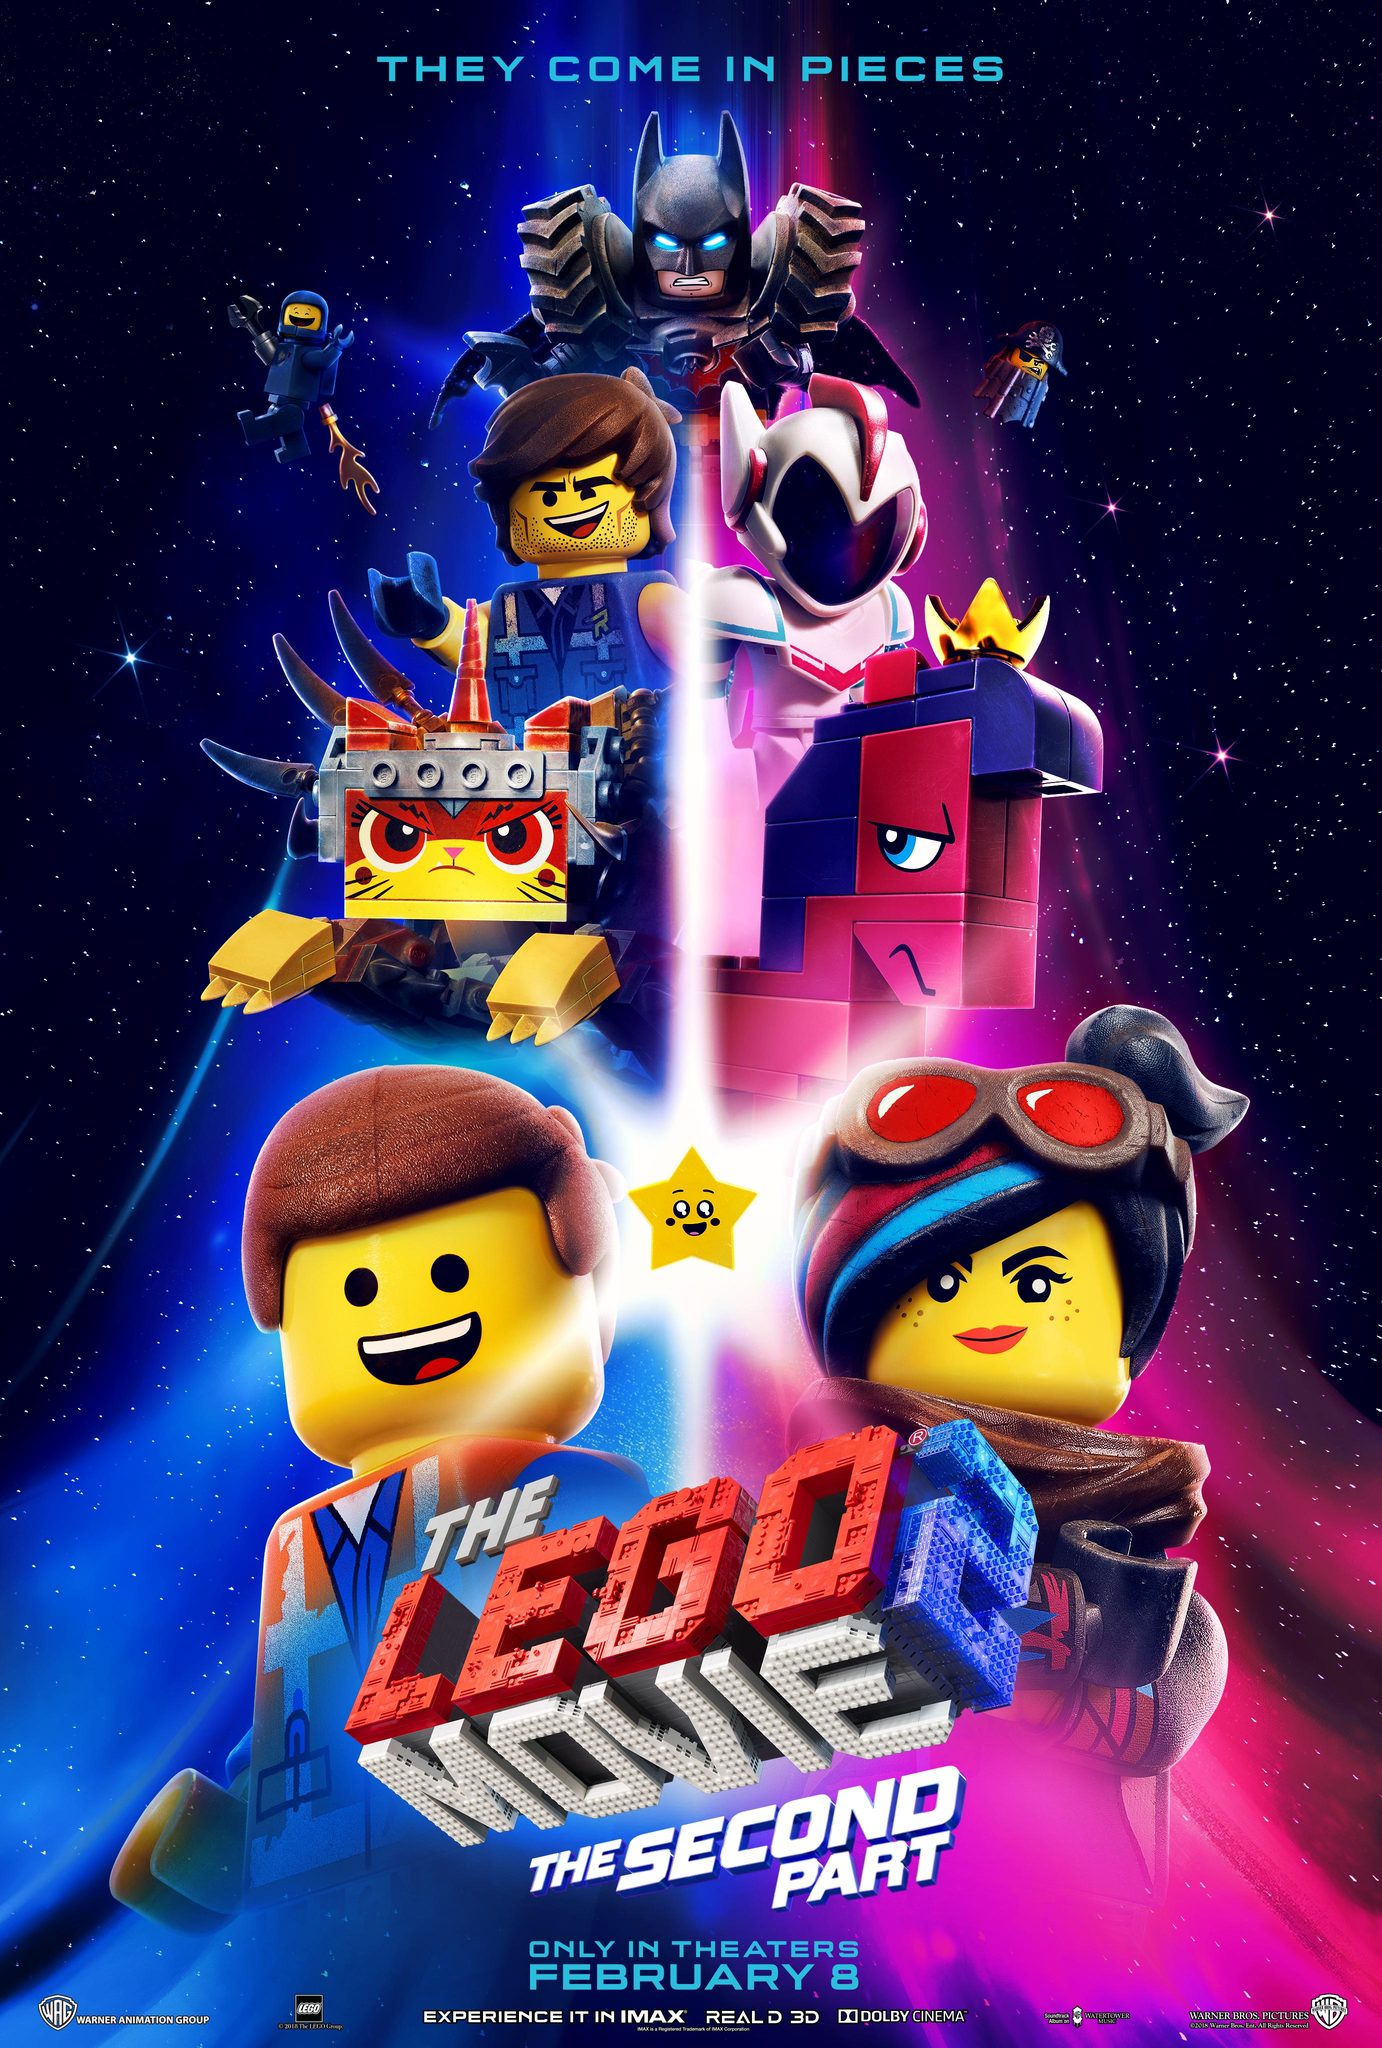 Stiahni si Filmy Kreslené LEGO pribeh 2 / The Lego Movie 2: The Second Part (2019)(CZ/SK/EN)[720p] = CSFD 69%